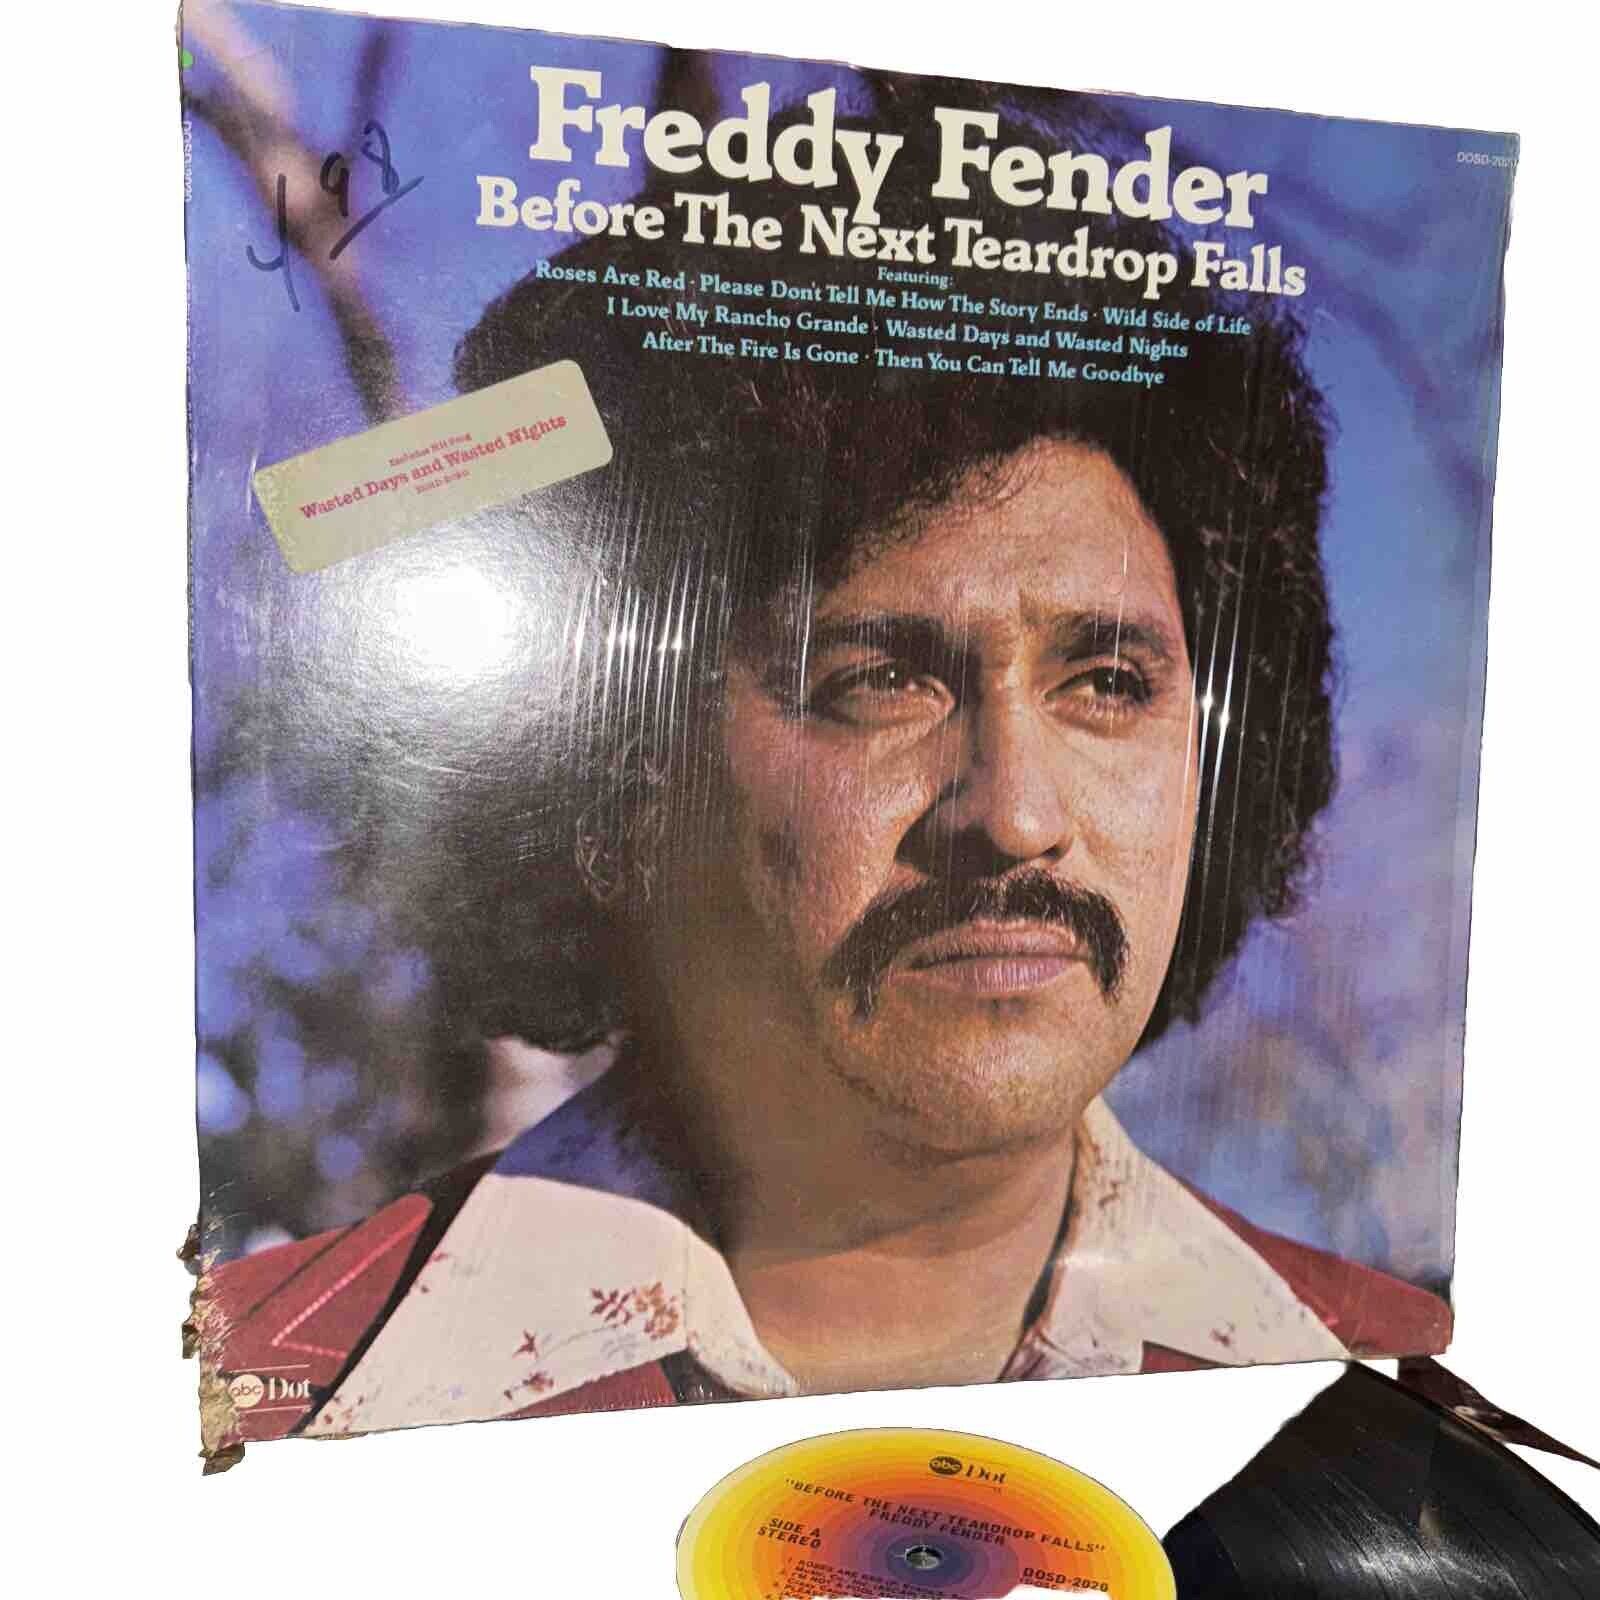 FREDDY FENDER Before The Next Teardrop Falls VINTAGE 1975 Vinyl 33rpm Record